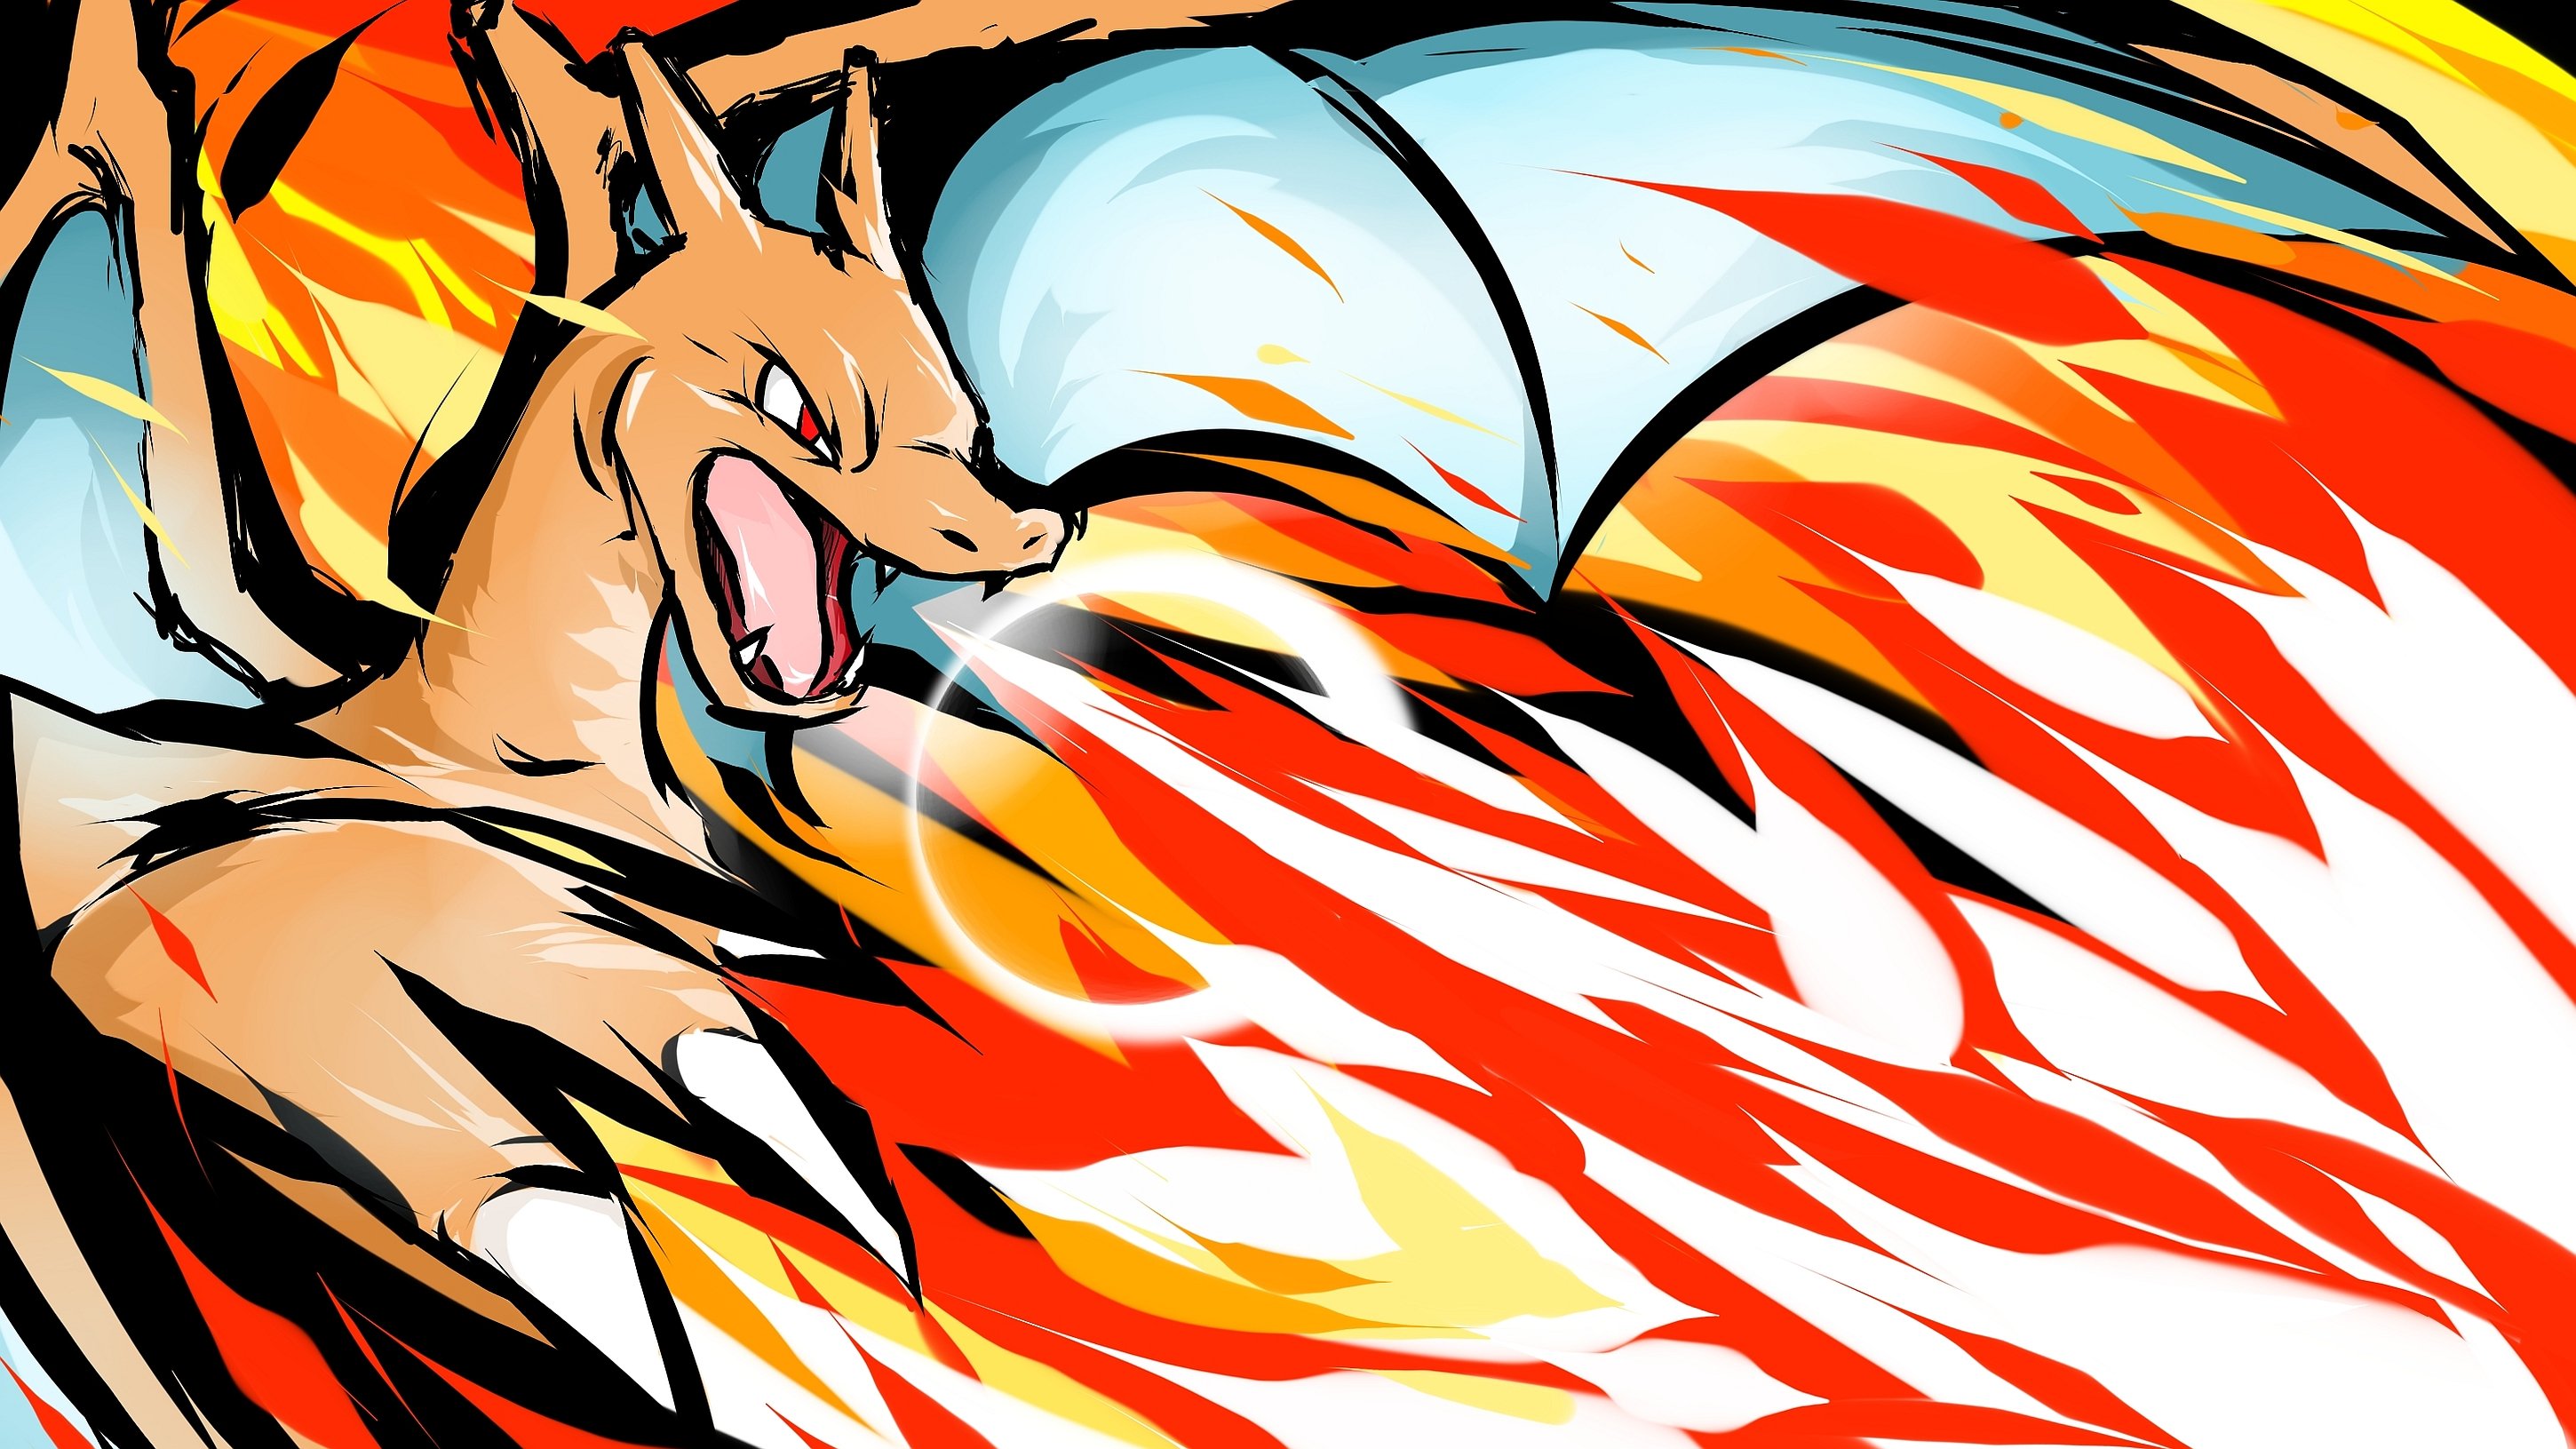 Charizard Pokemon Cartoon Fire Dragon wallpaper